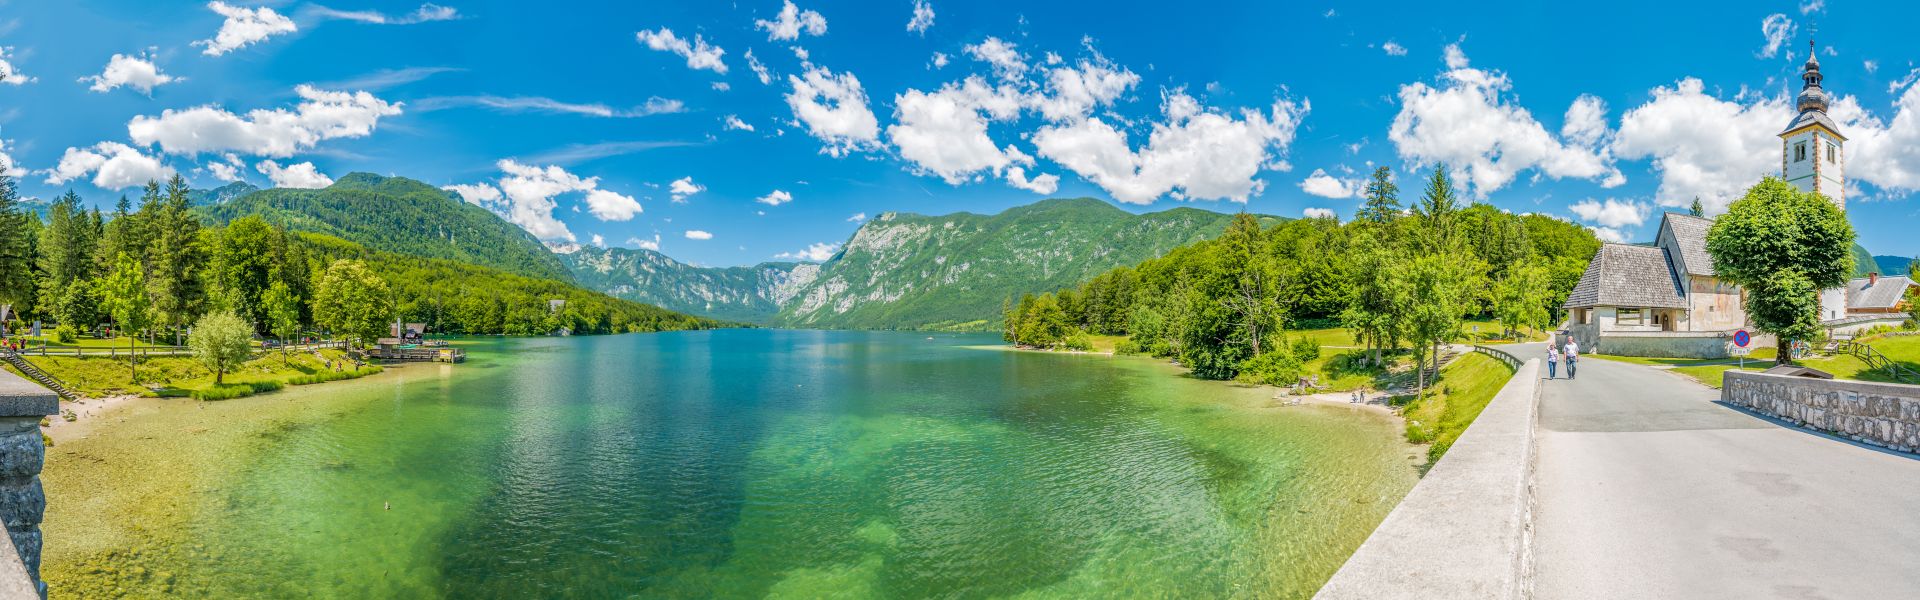 Ferienhausurlaub in Slowenien 